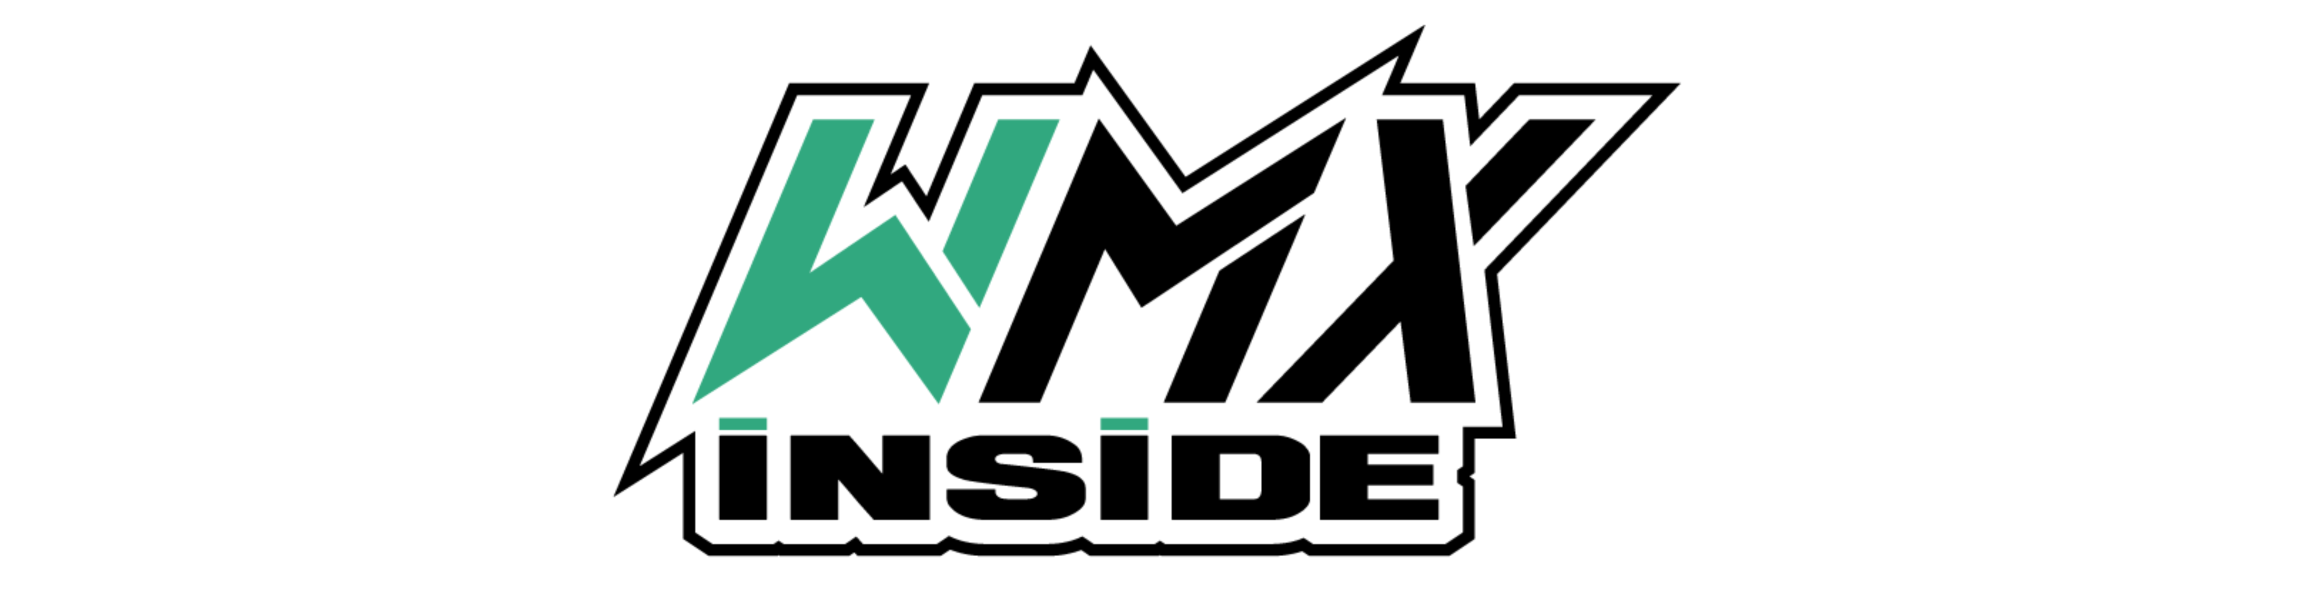 WMX Inside - All informations about Women in motorsports